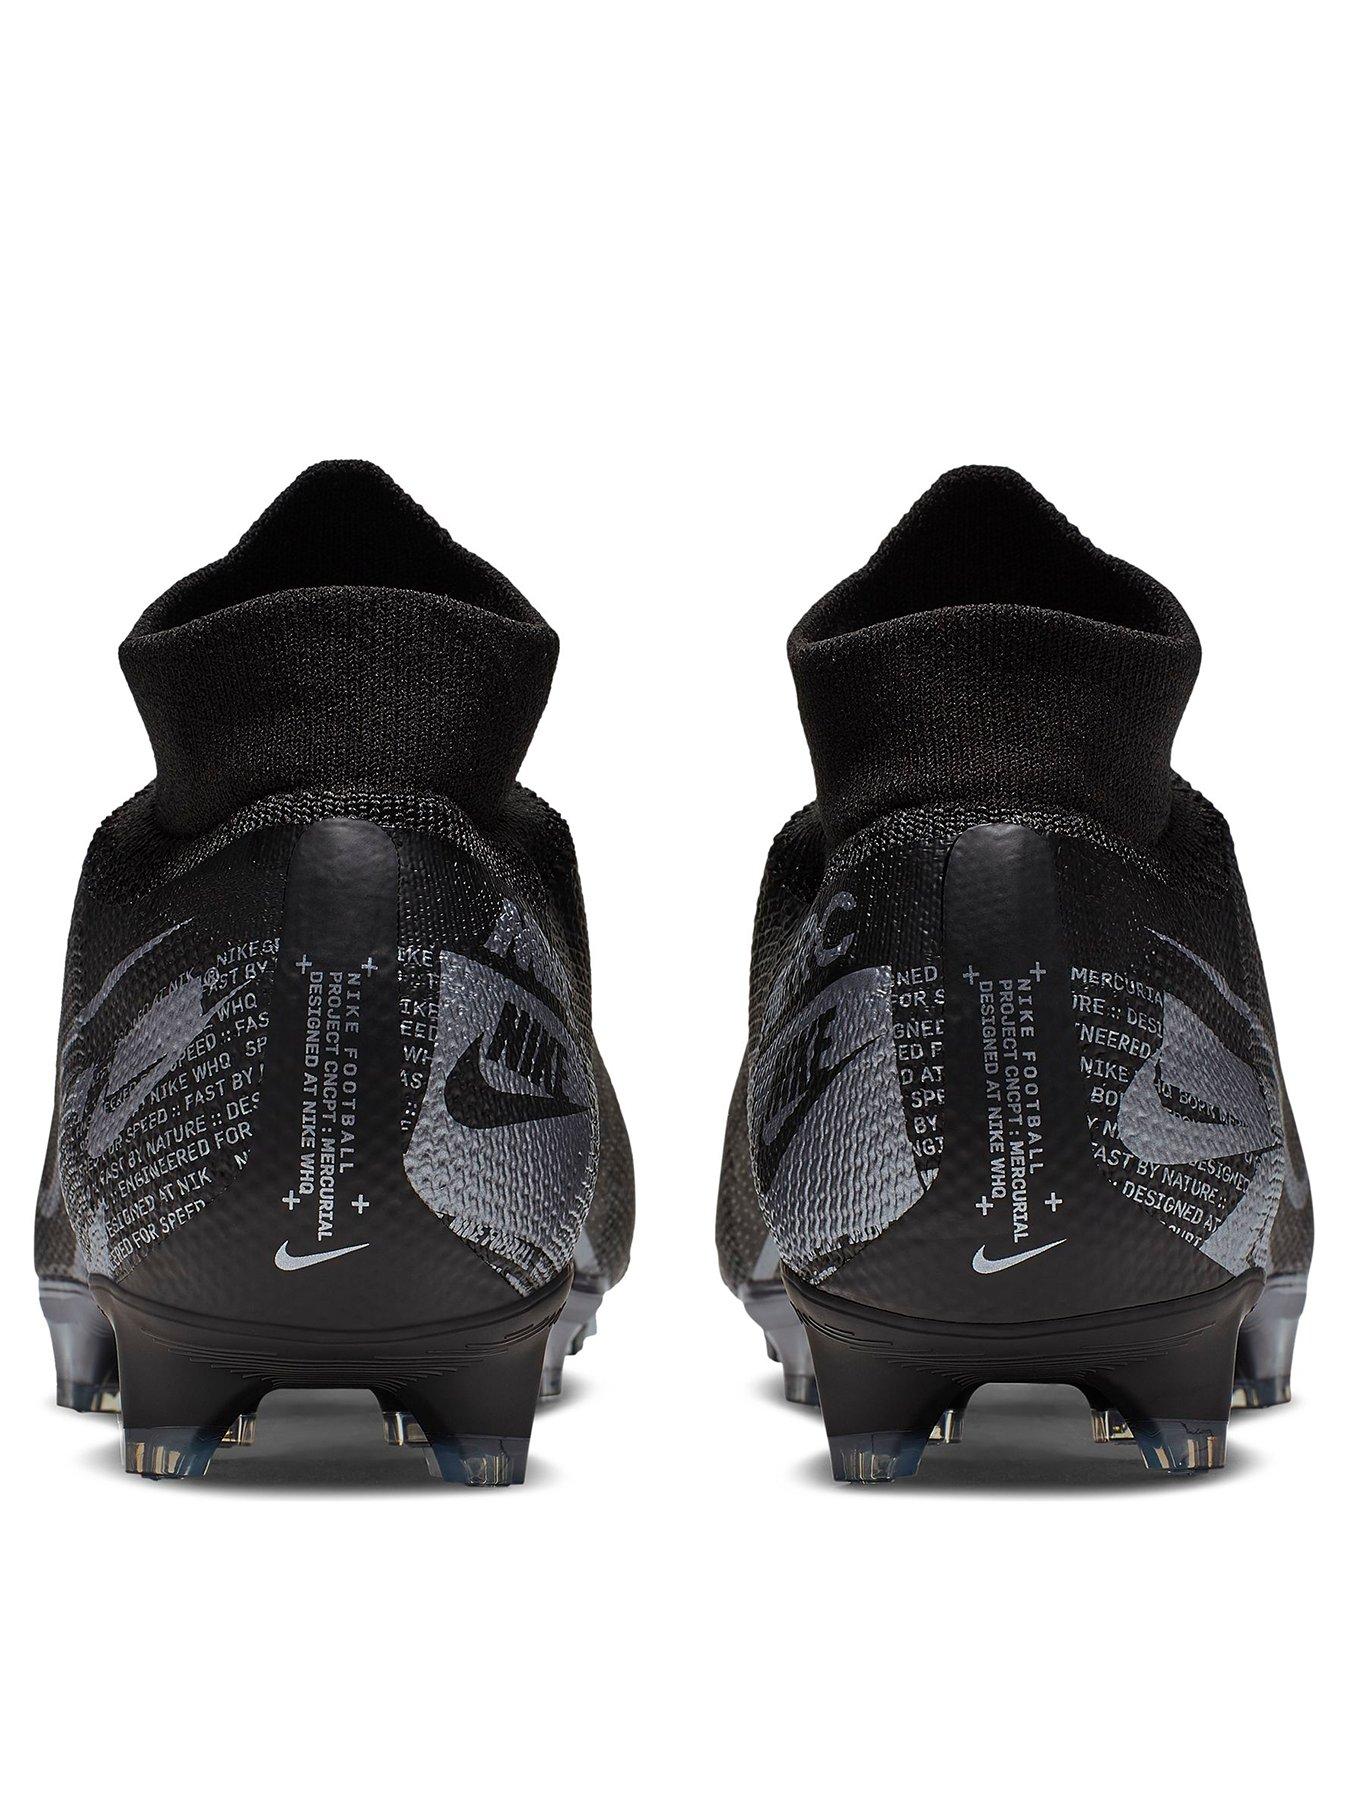 Nike Mercurial Superfly VI Elite SG PRO AC football boots.